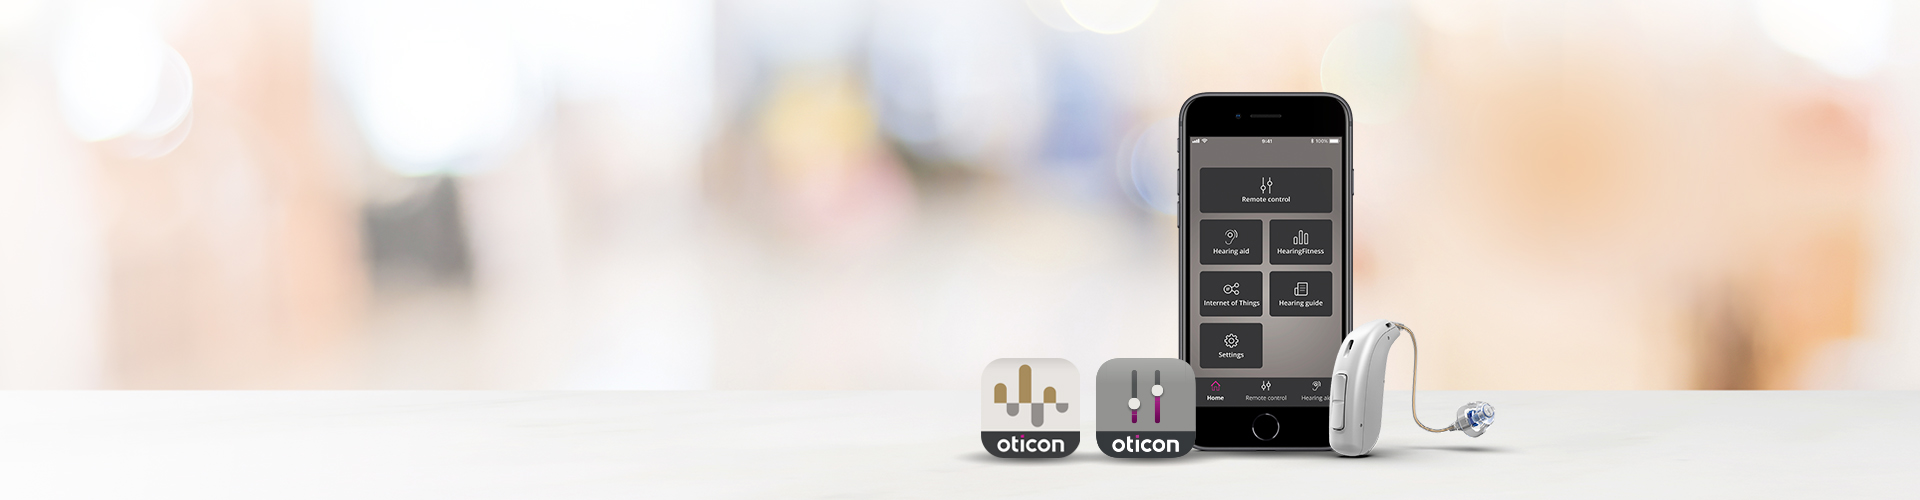 oticon-on-companion-app-2020-banner-1920x500-v2